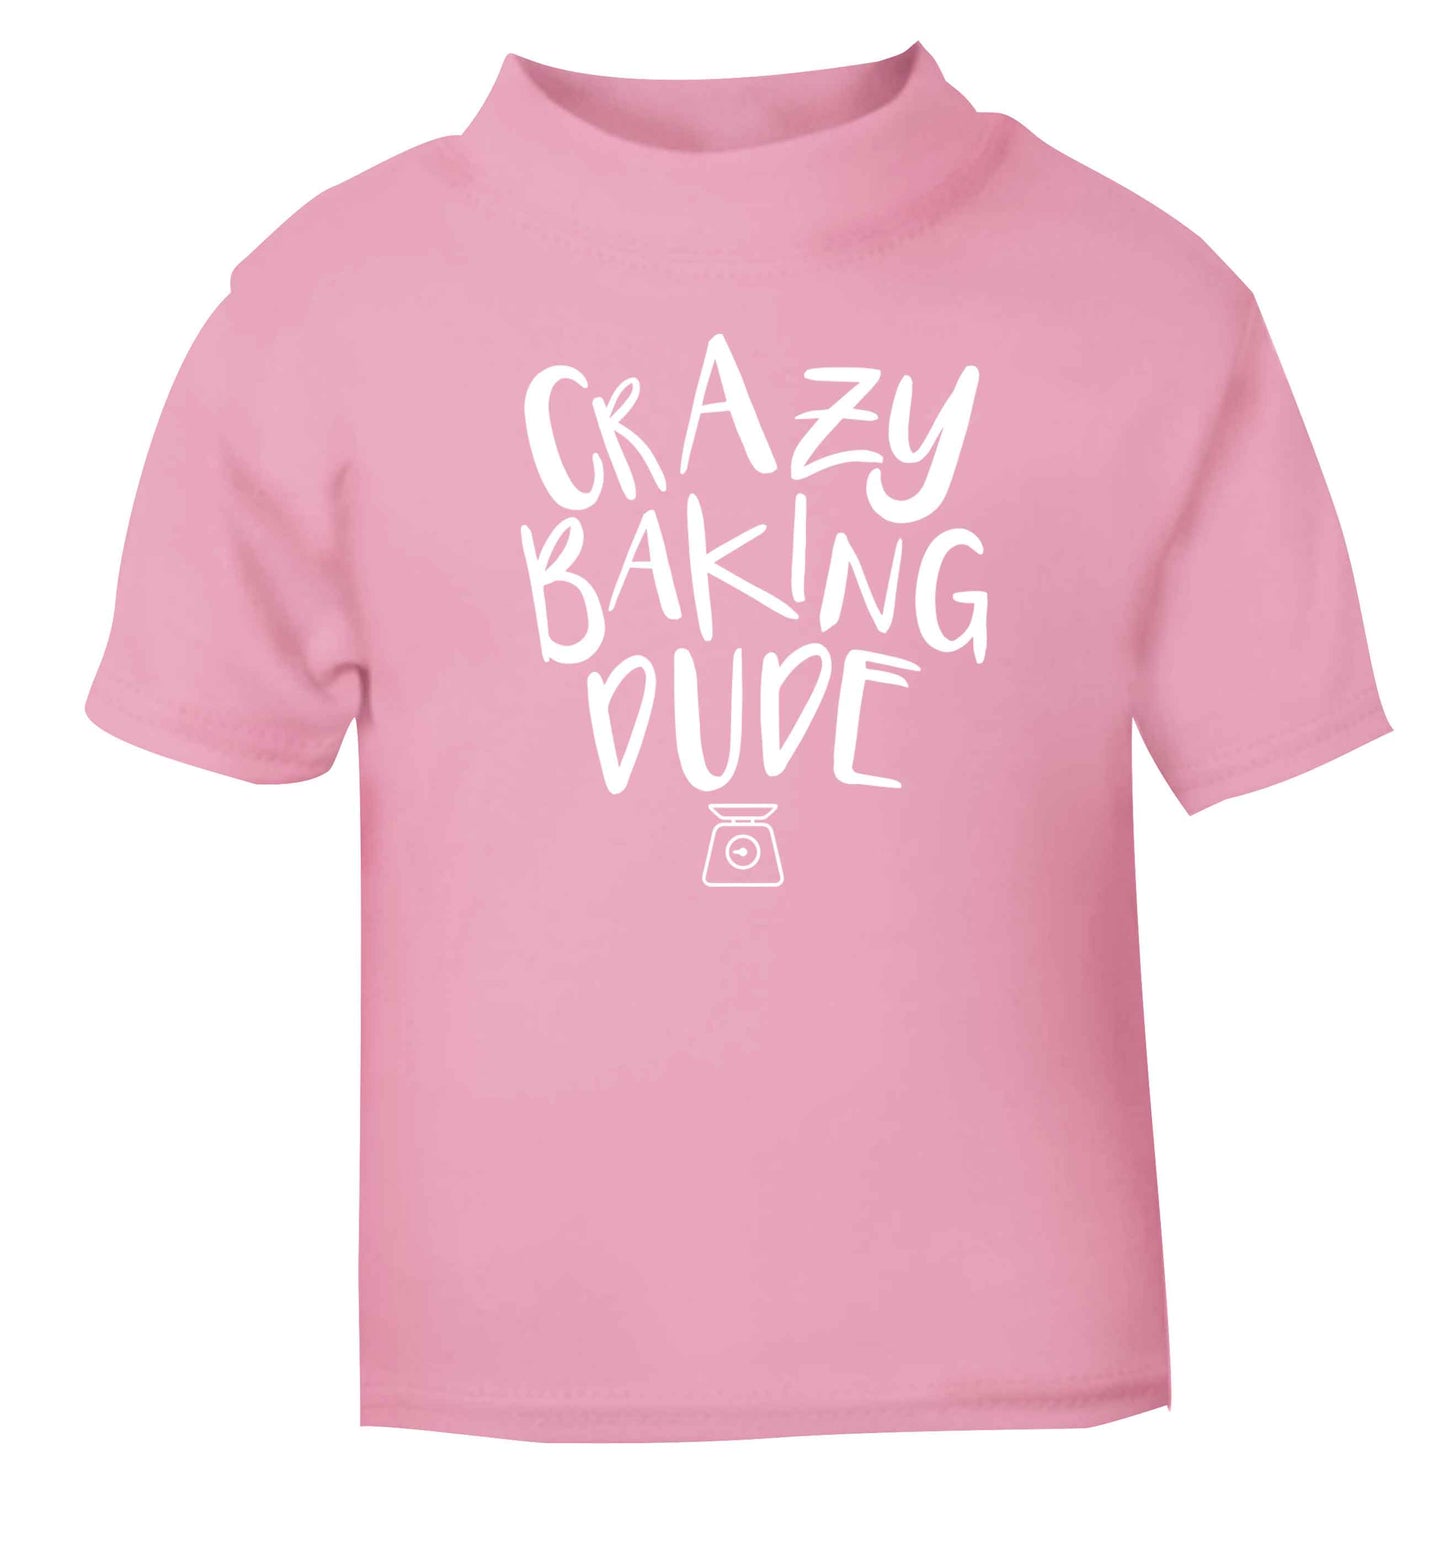 Crazy baking dude light pink Baby Toddler Tshirt 2 Years